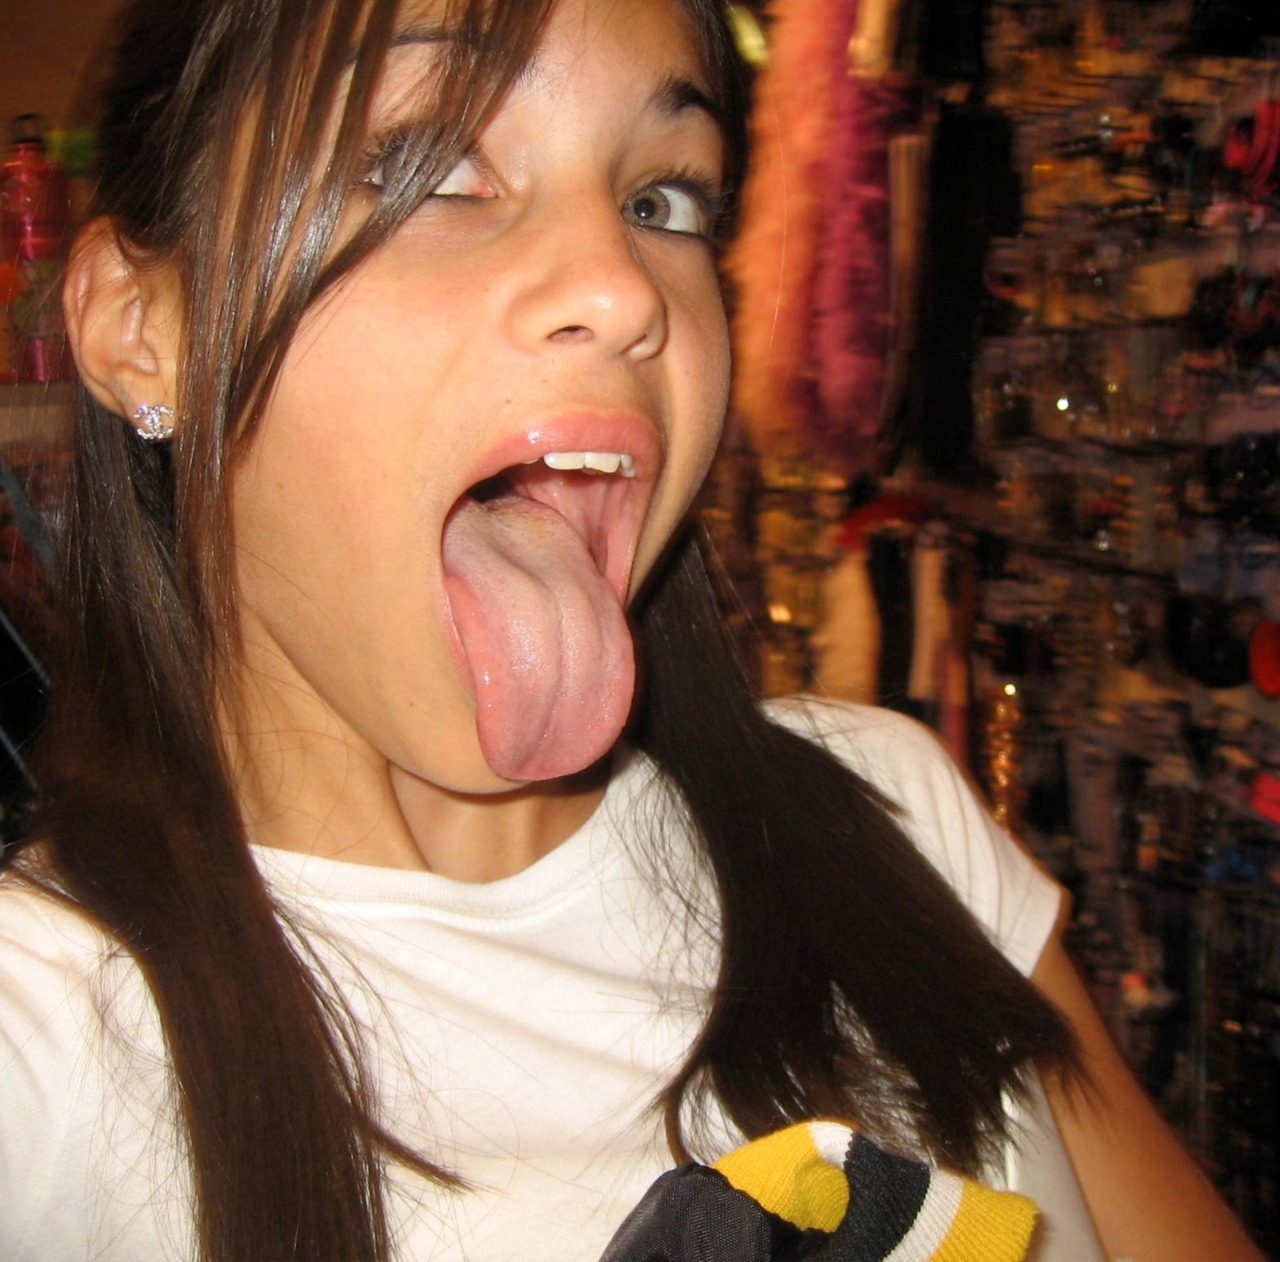 Girl cum on tongue